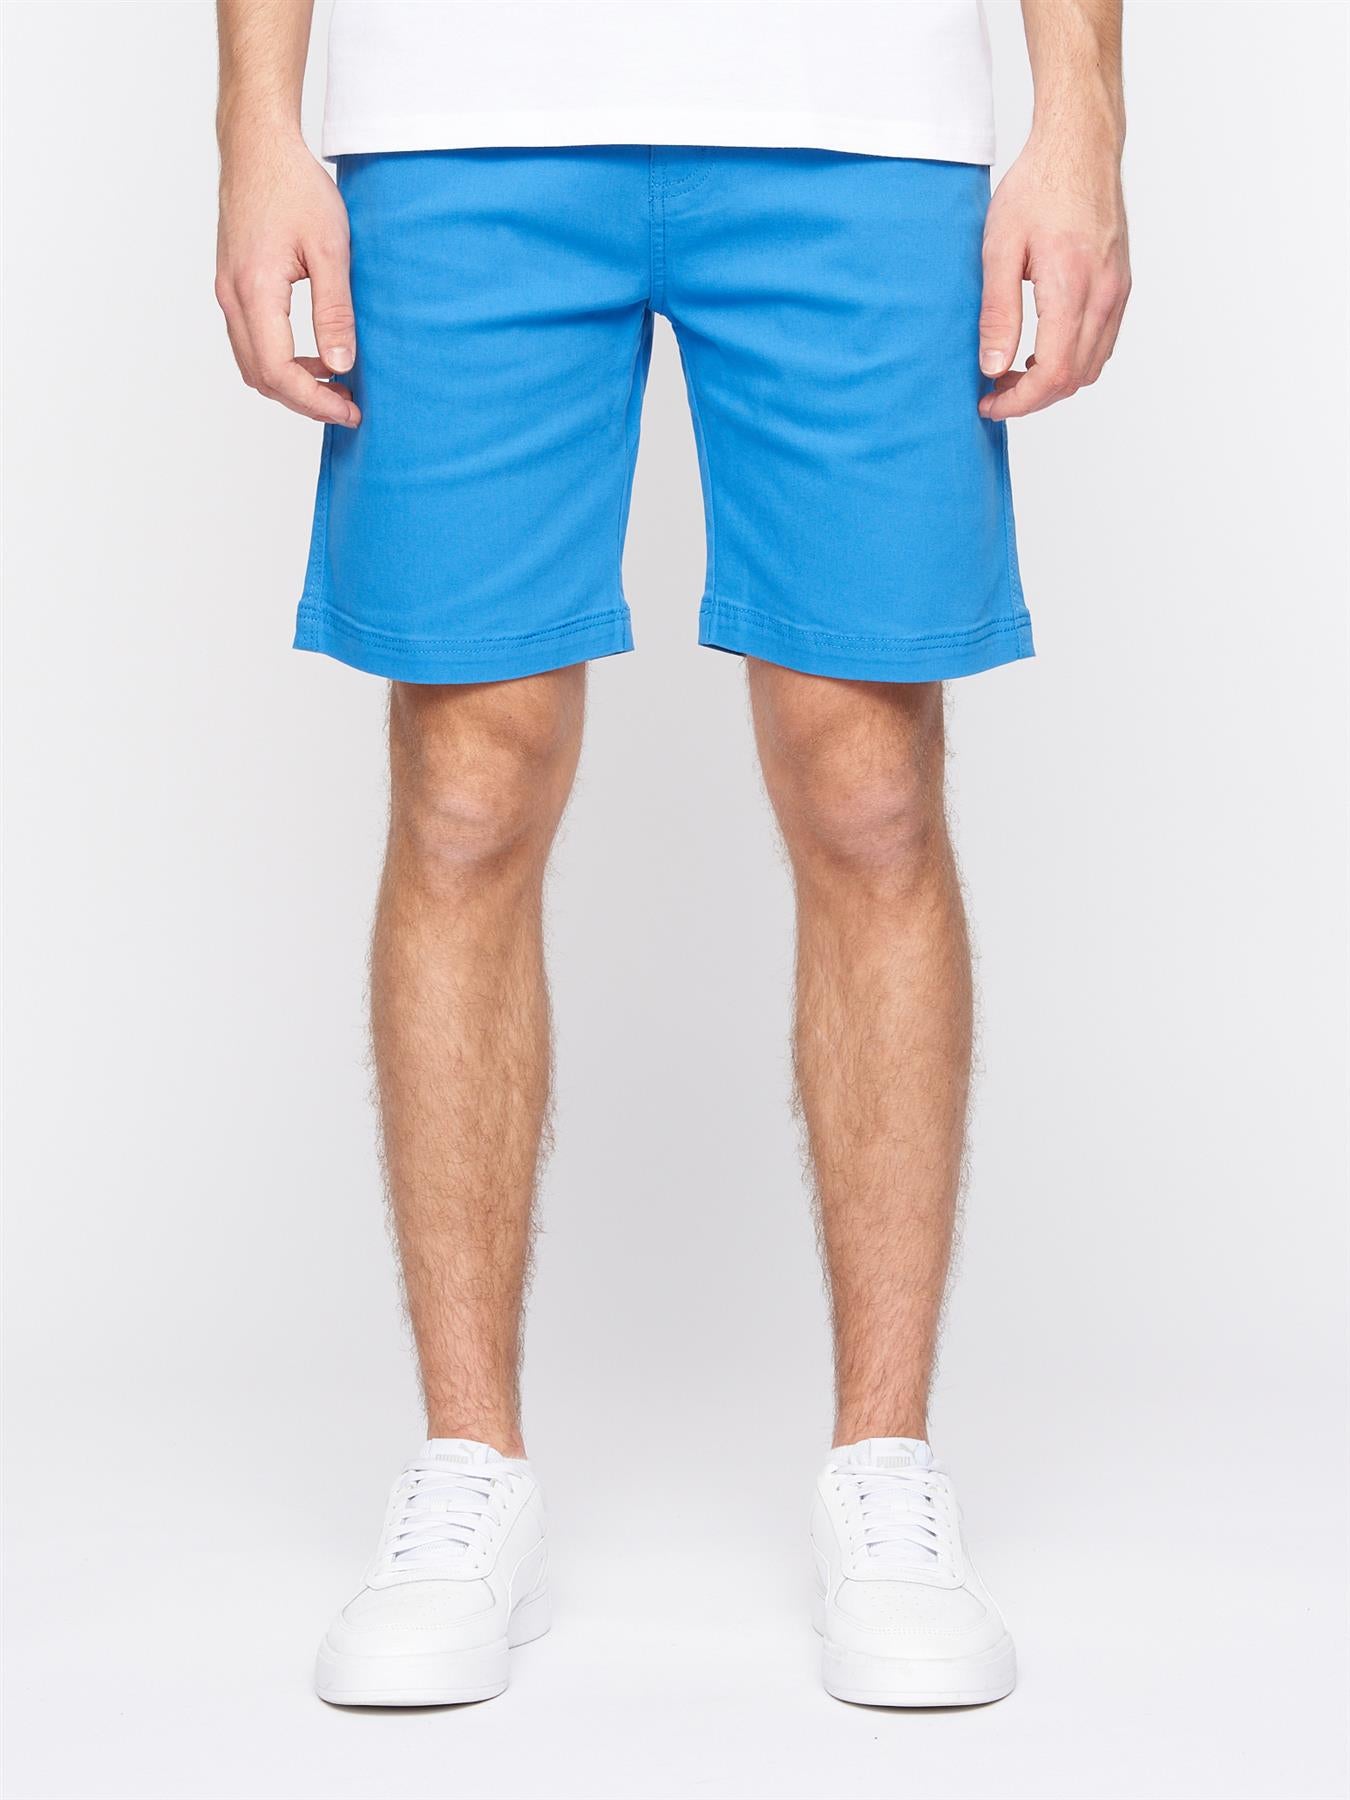 Marvis Shorts Bright Blue